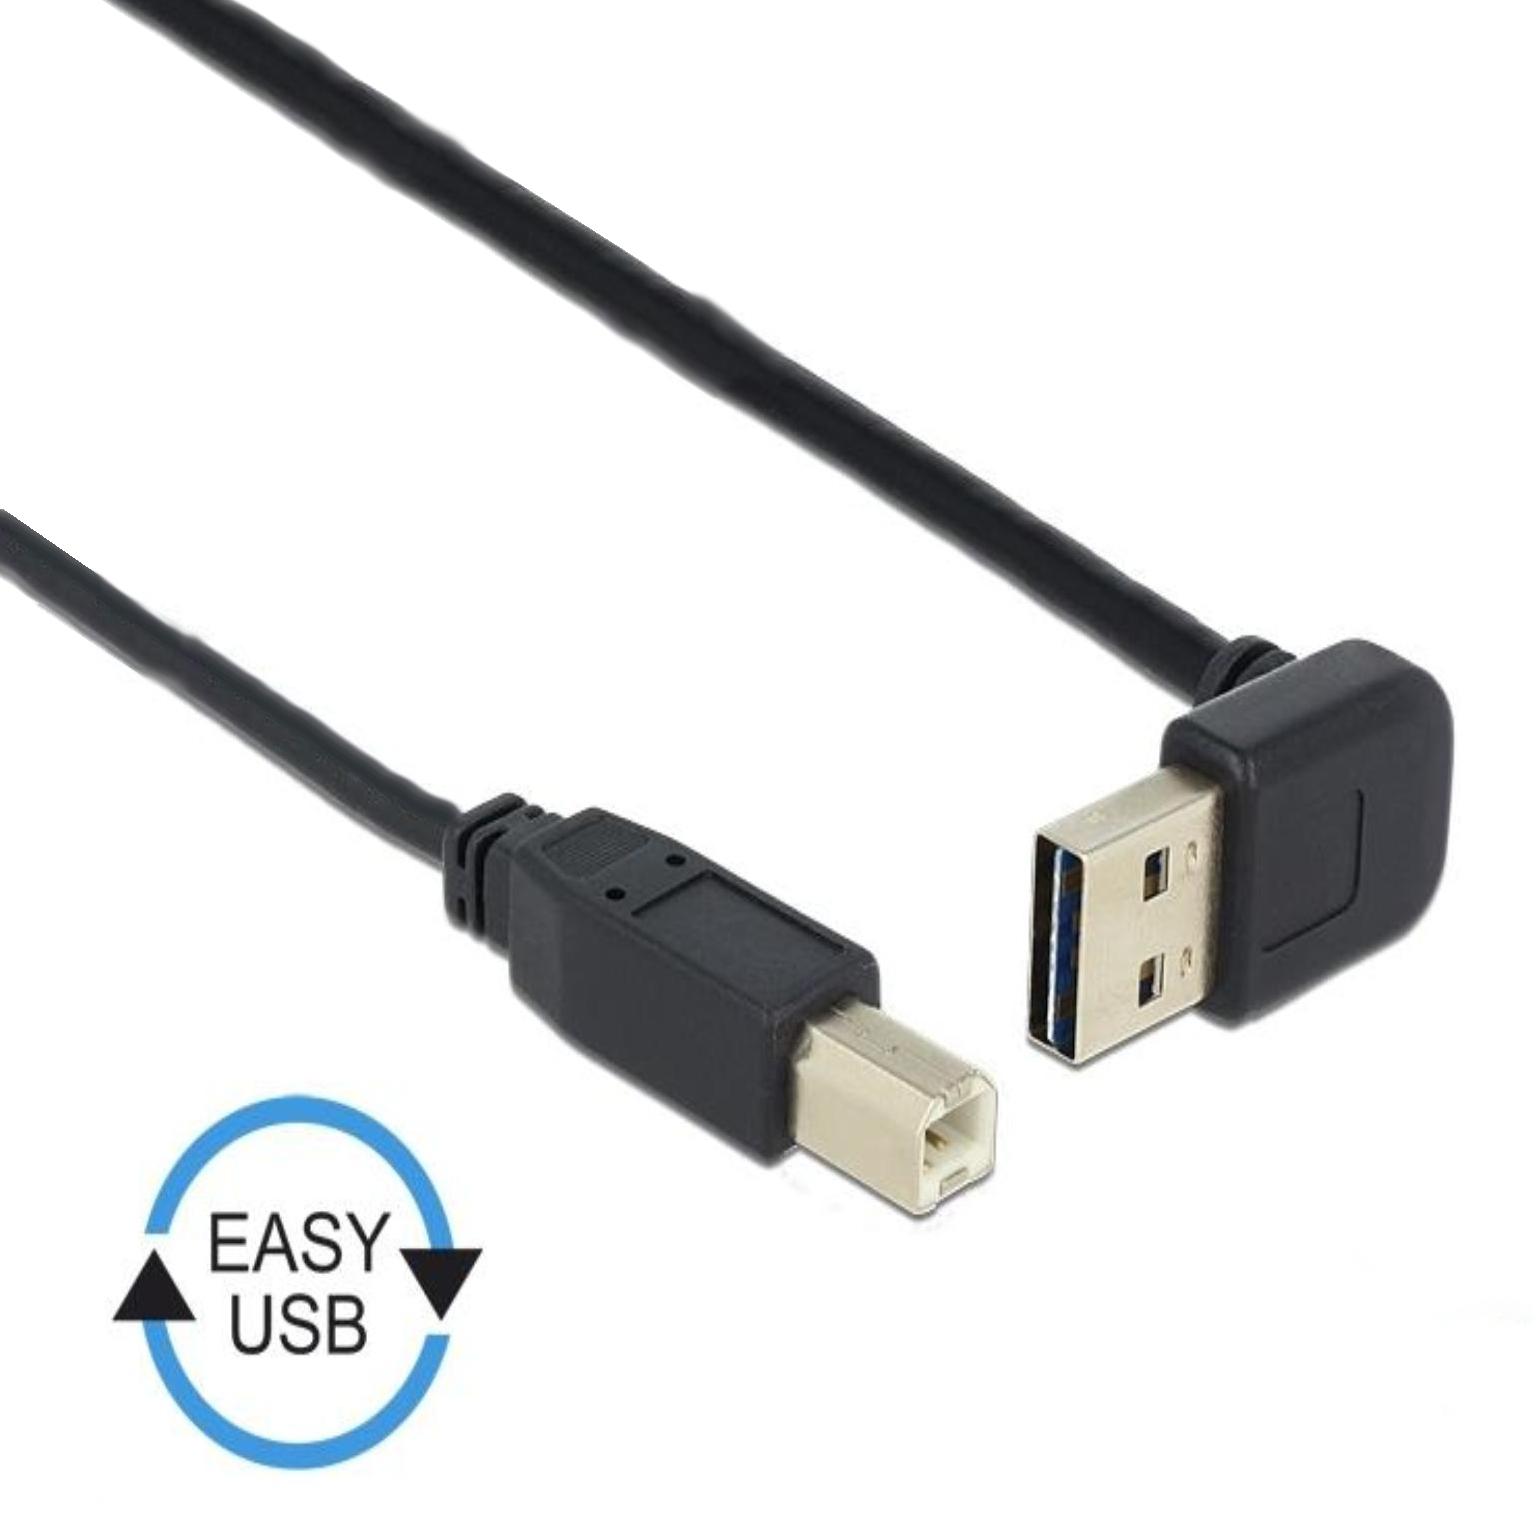 USB B kabel - Easy USB - Delock